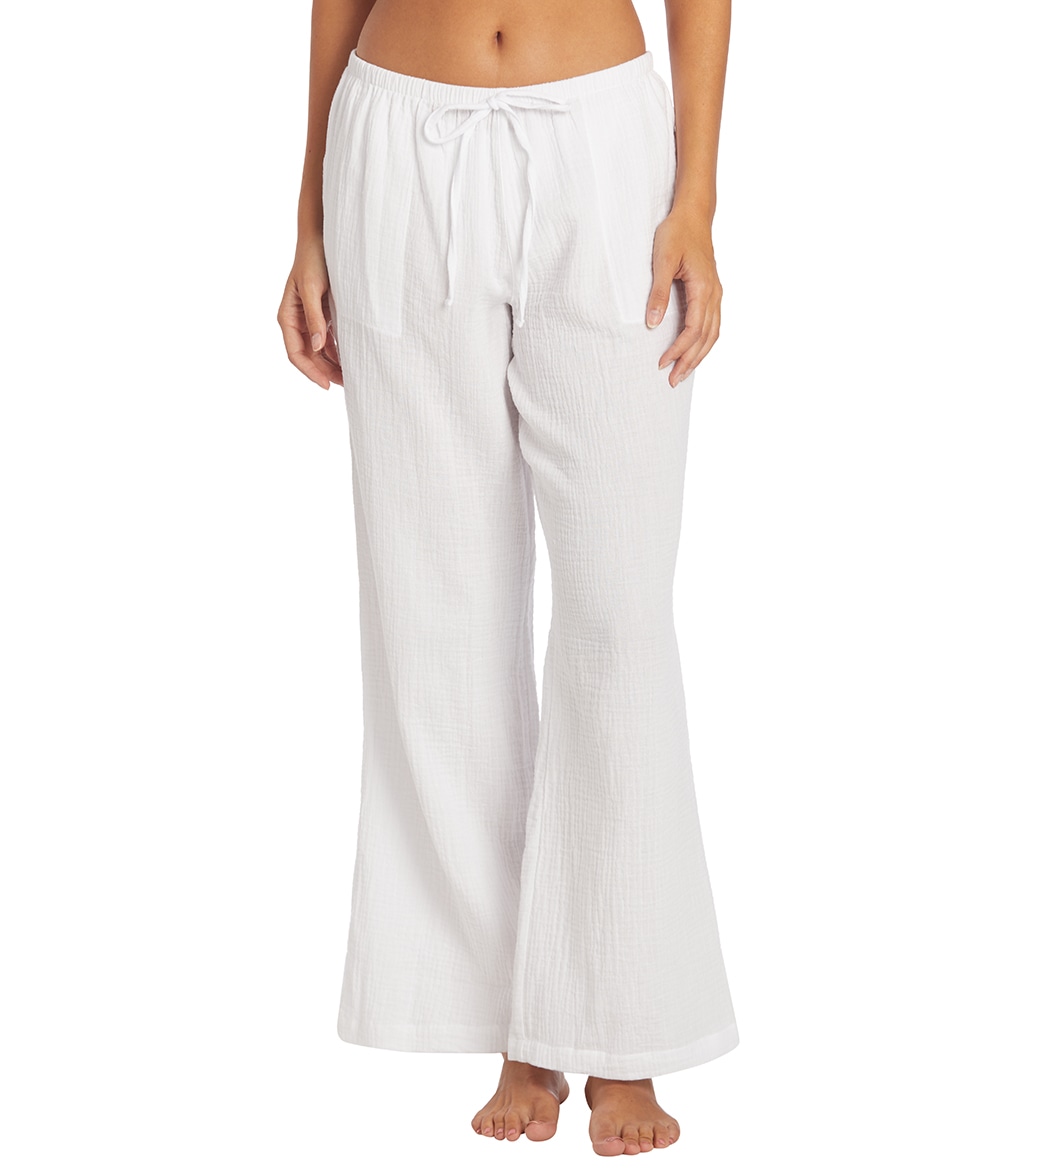 J.valdi Women's Cozumel Beach Pants Cover Up - White Large Cotton - Swimoutlet.com